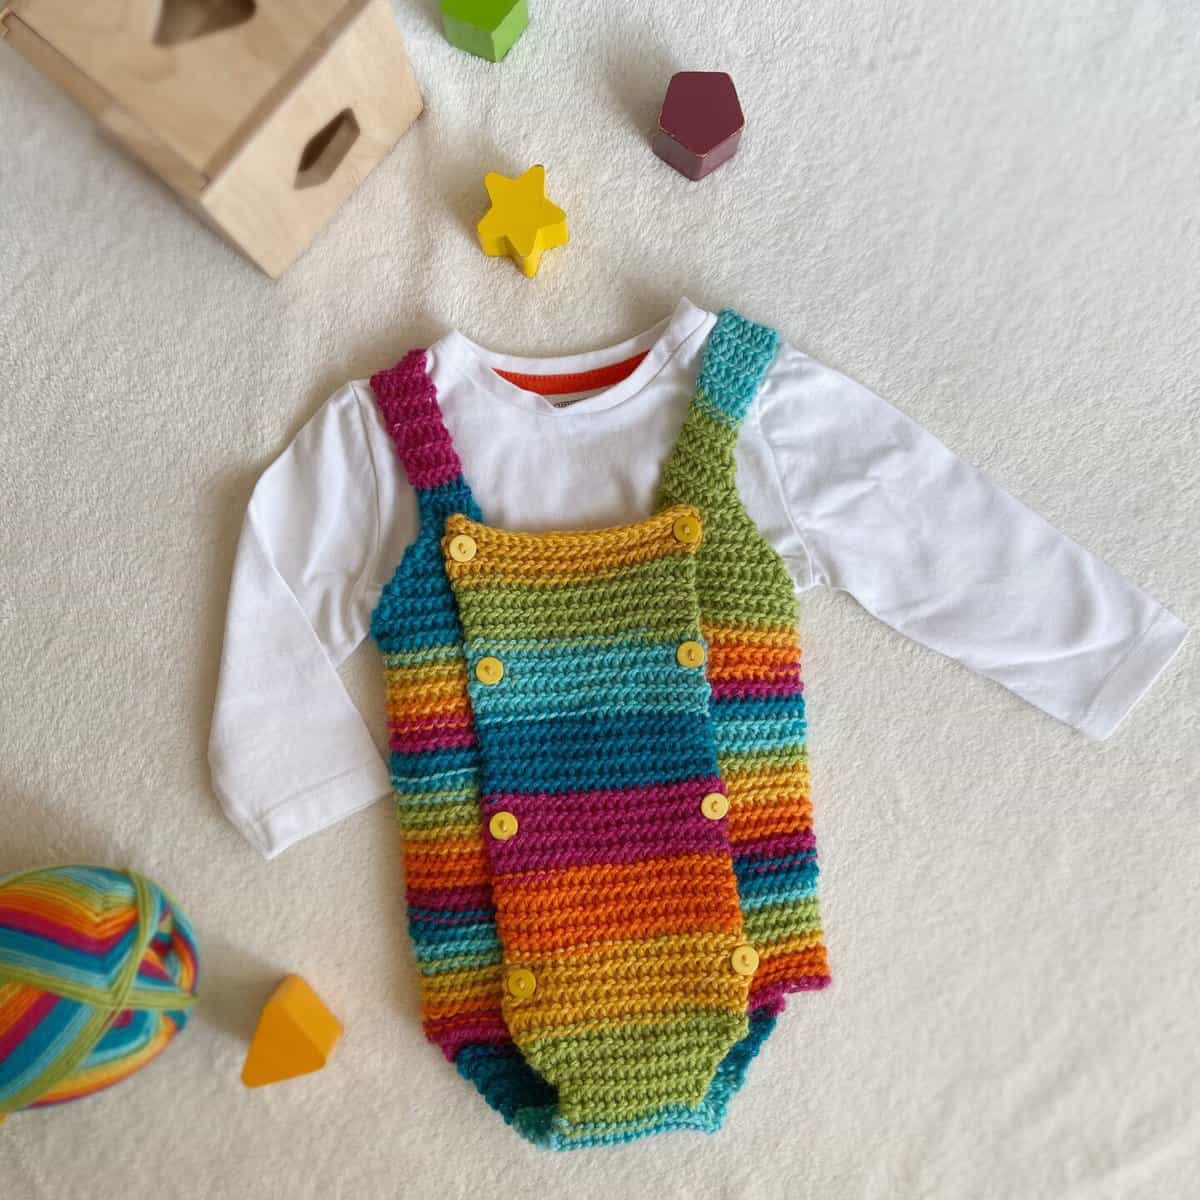 Rainbow baby crochet romper pattern.